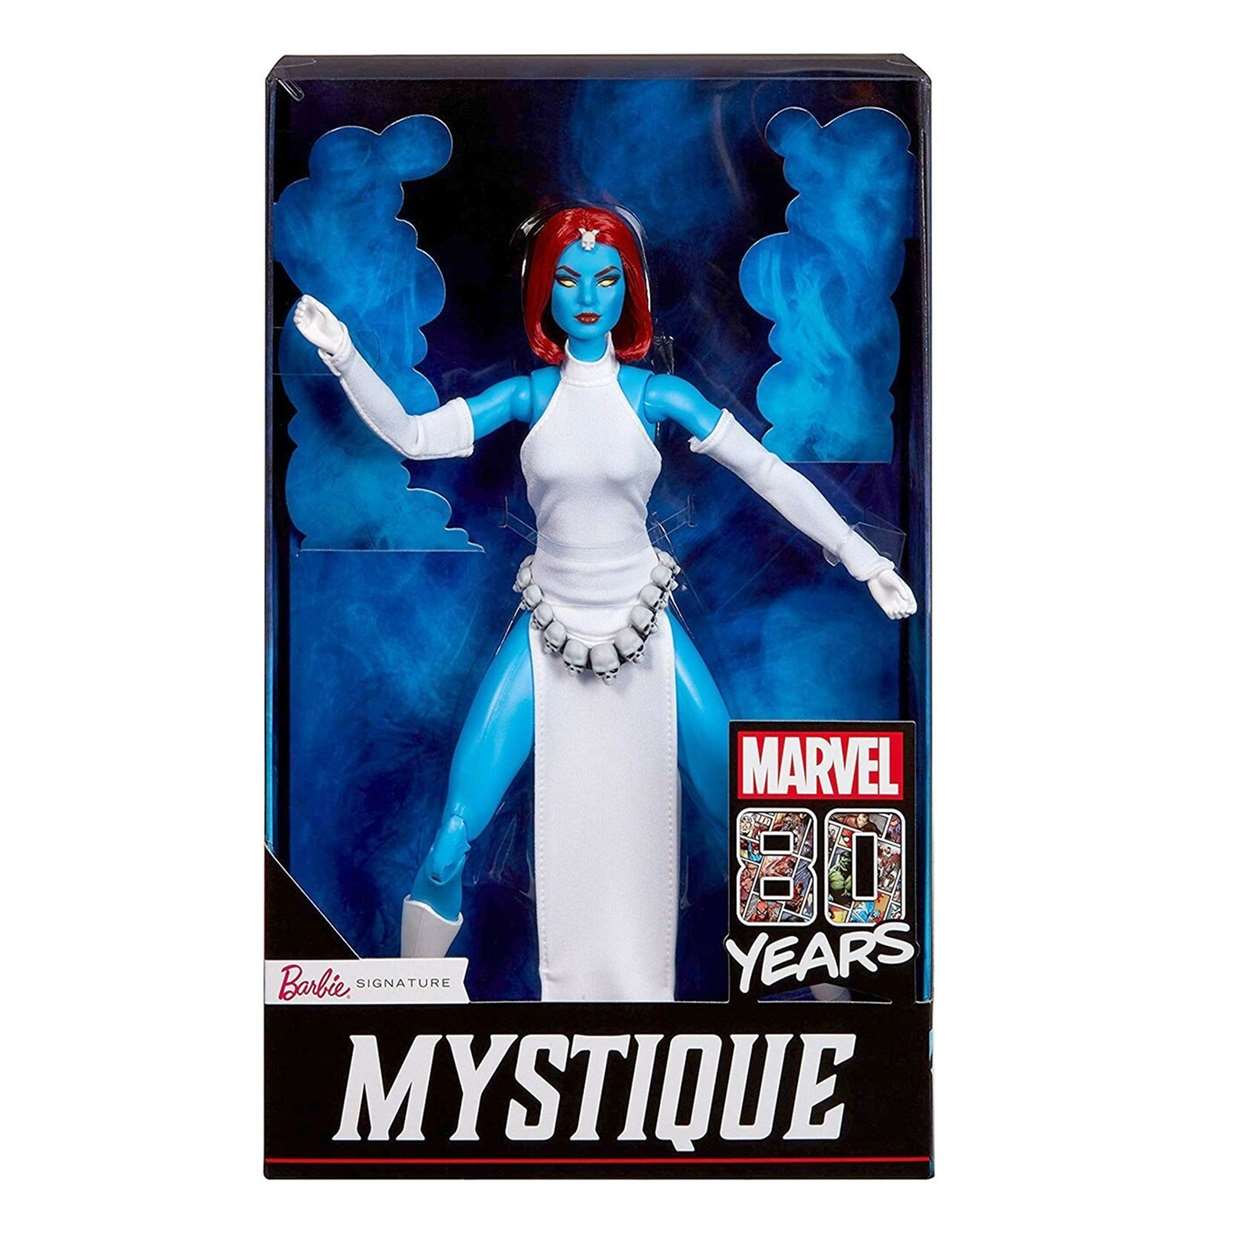 Mystique Doll Figura Barbie Signature Marvel 80th Years